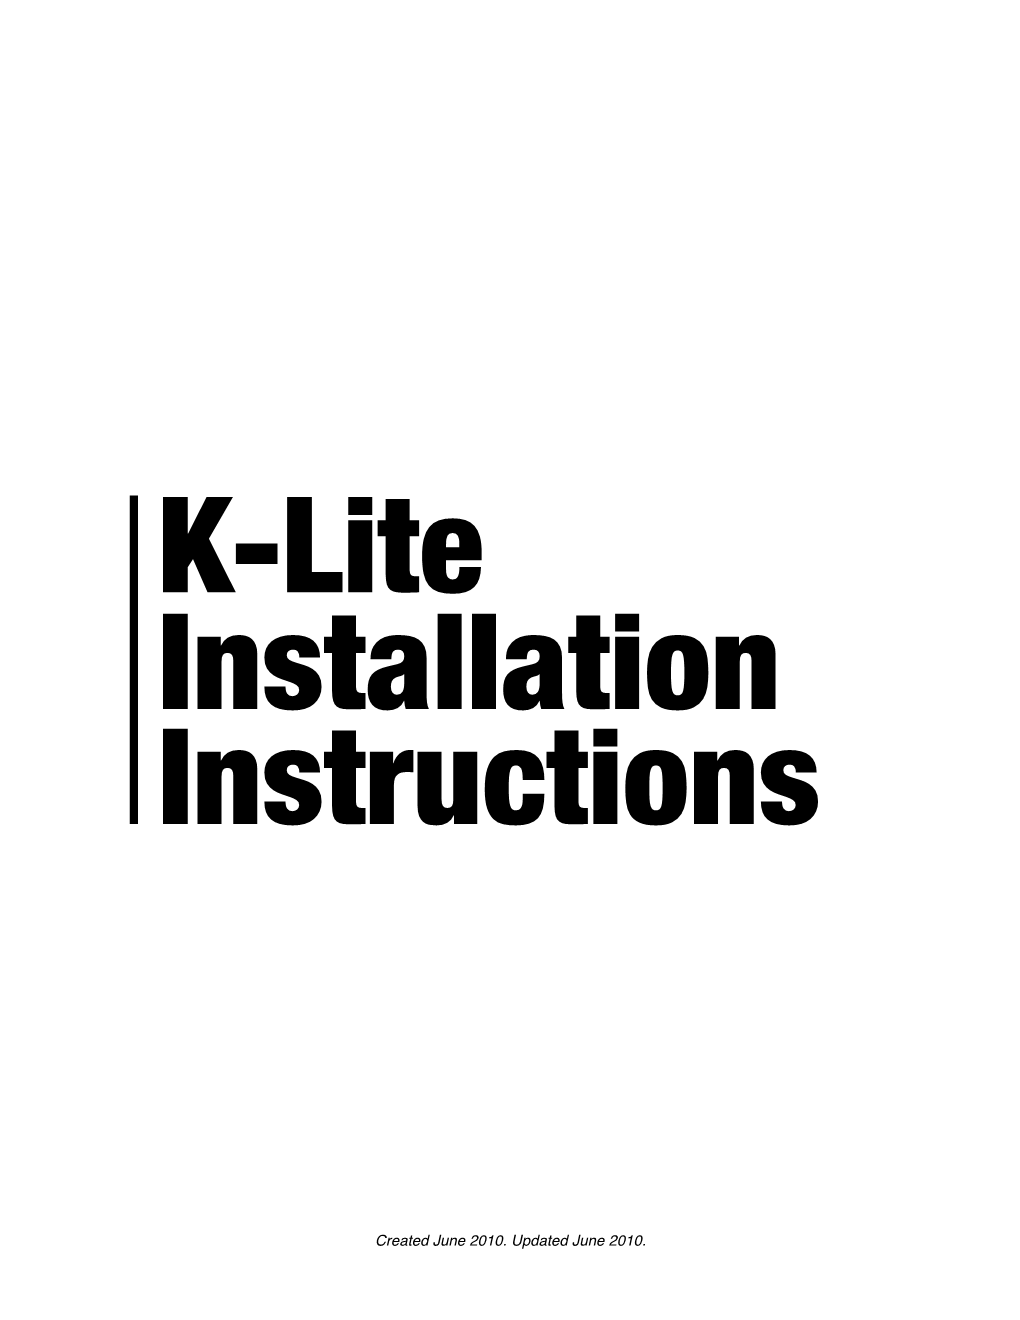 K-Lite Installation Instructions